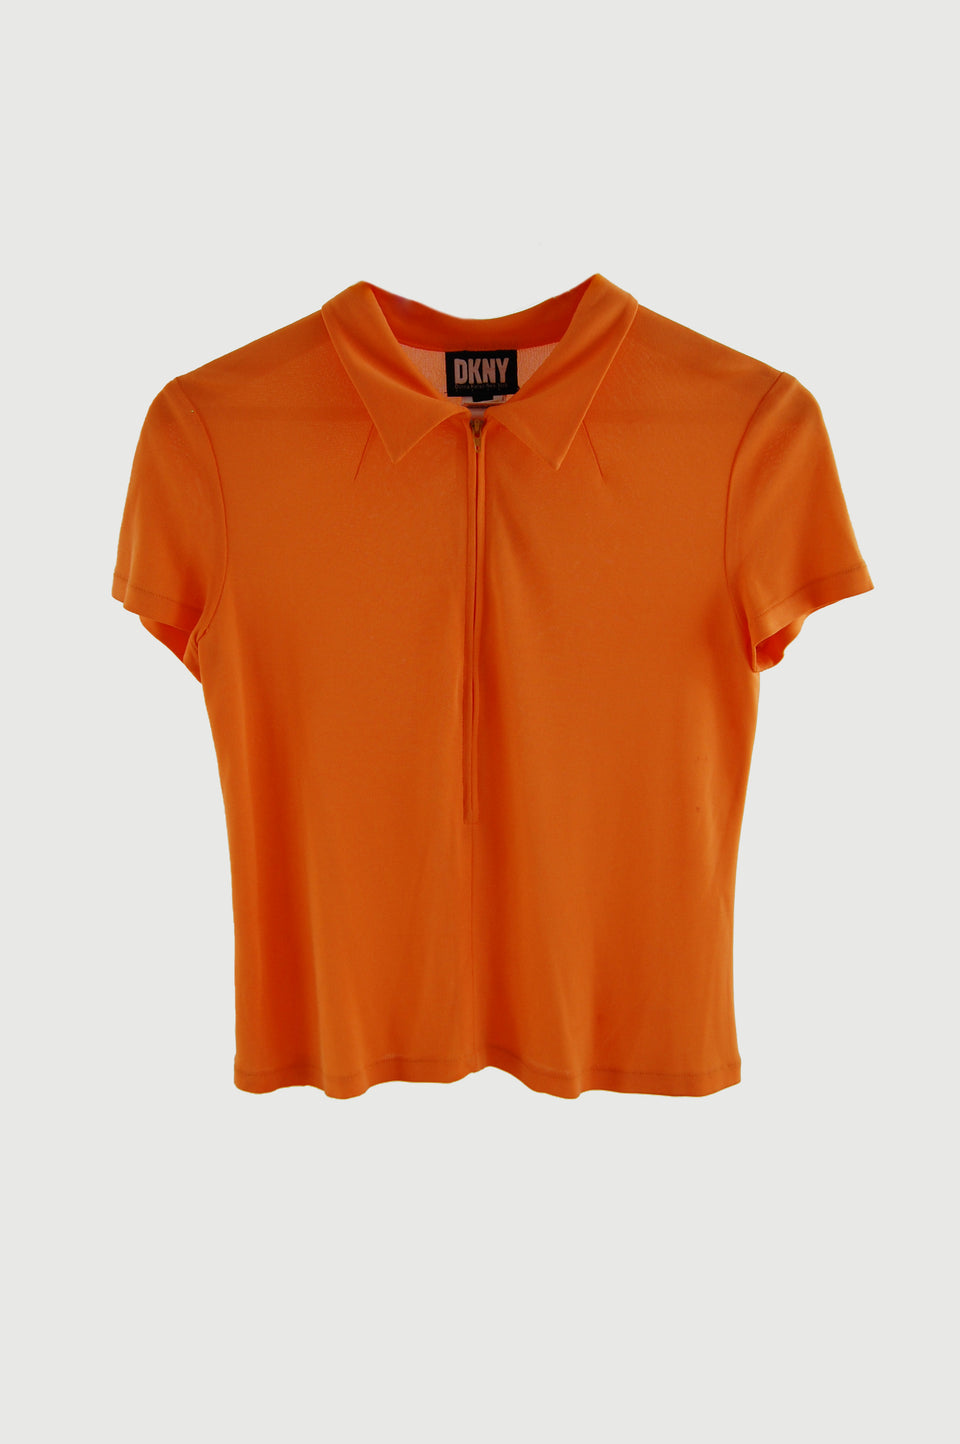 Orange DKNY Polo Top